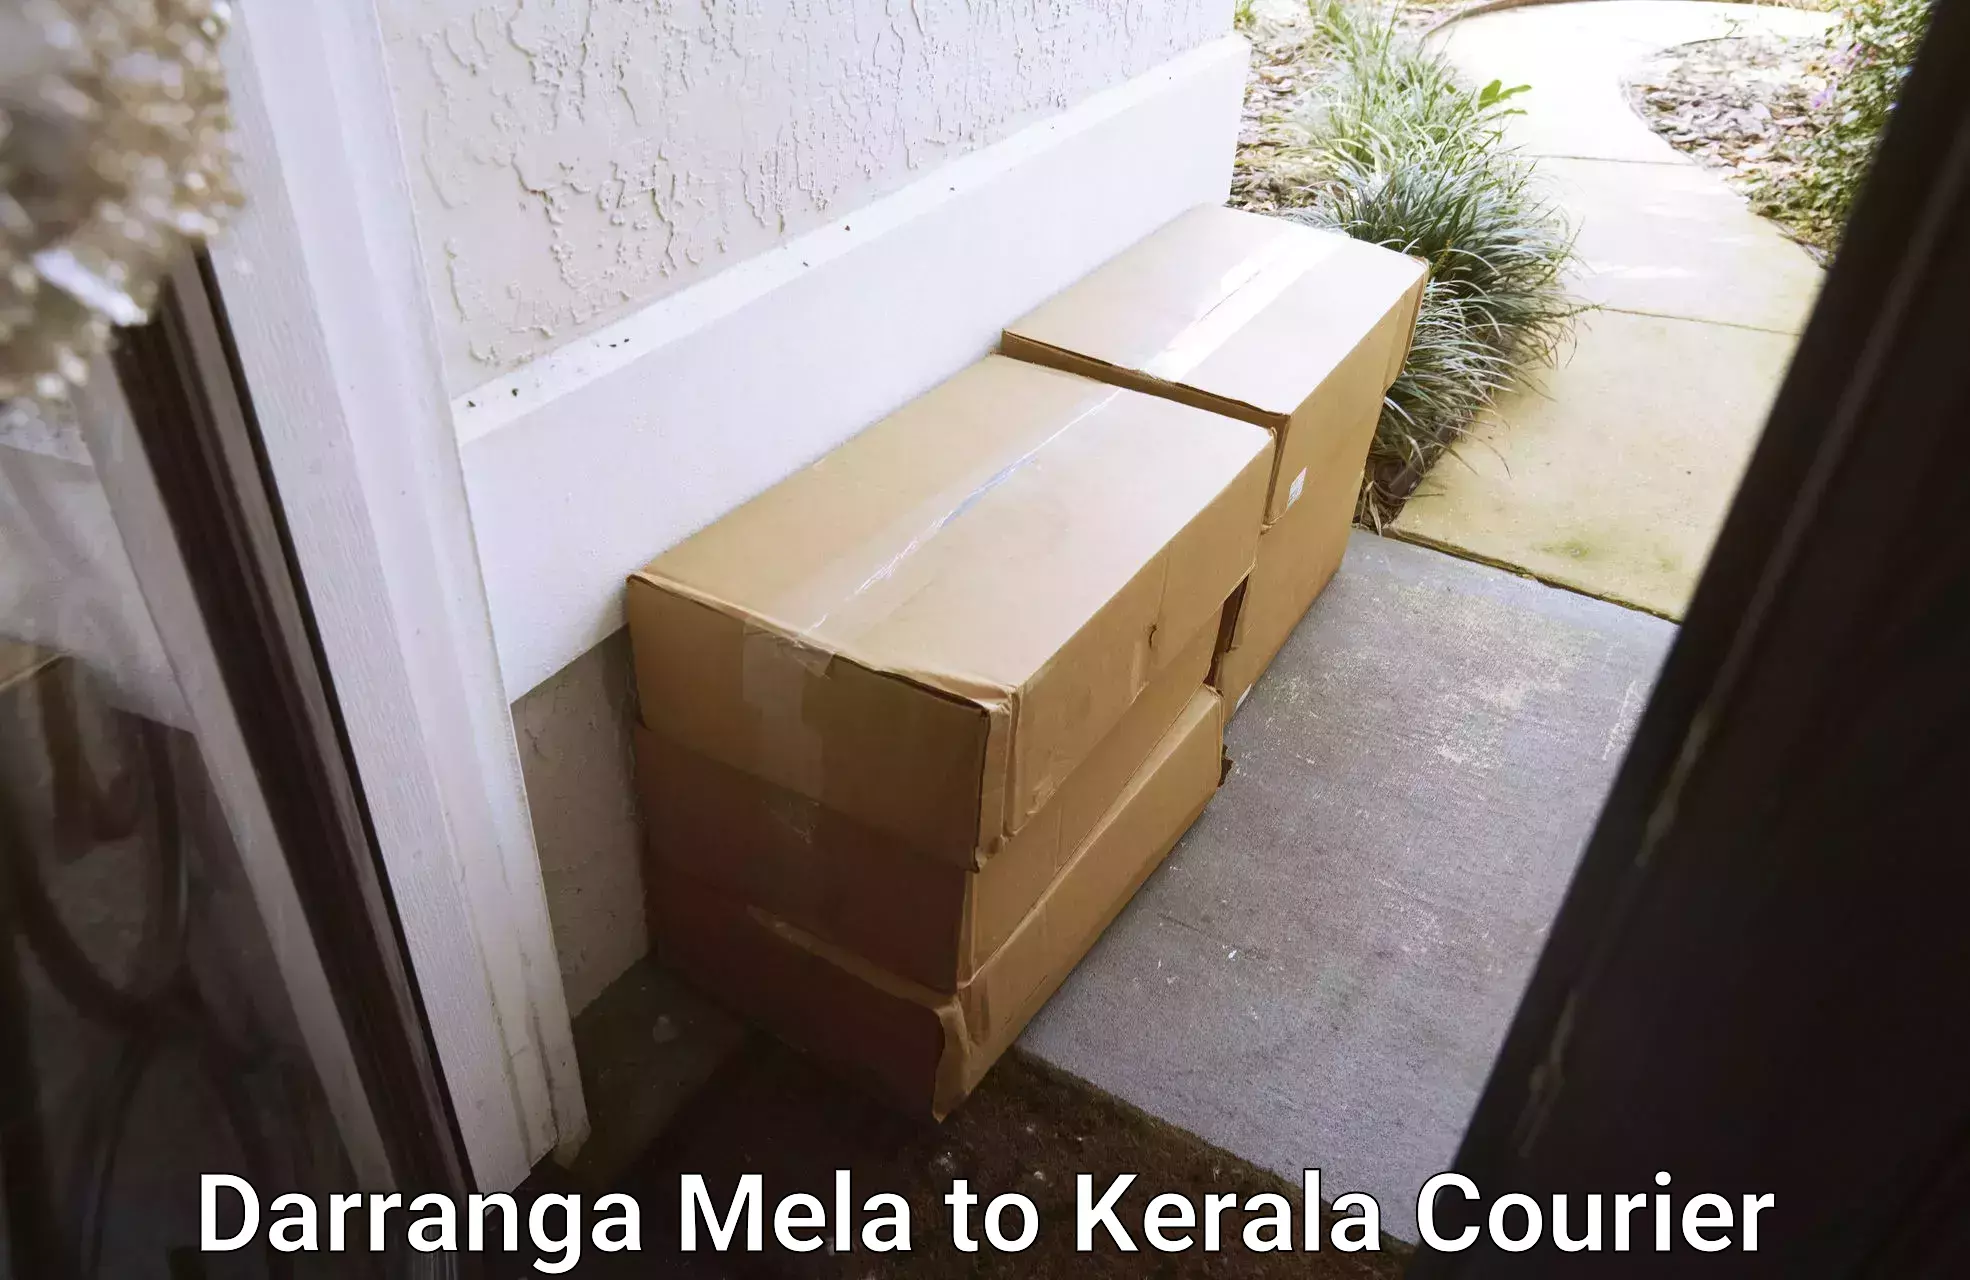 Full-service courier options Darranga Mela to Kodungallur